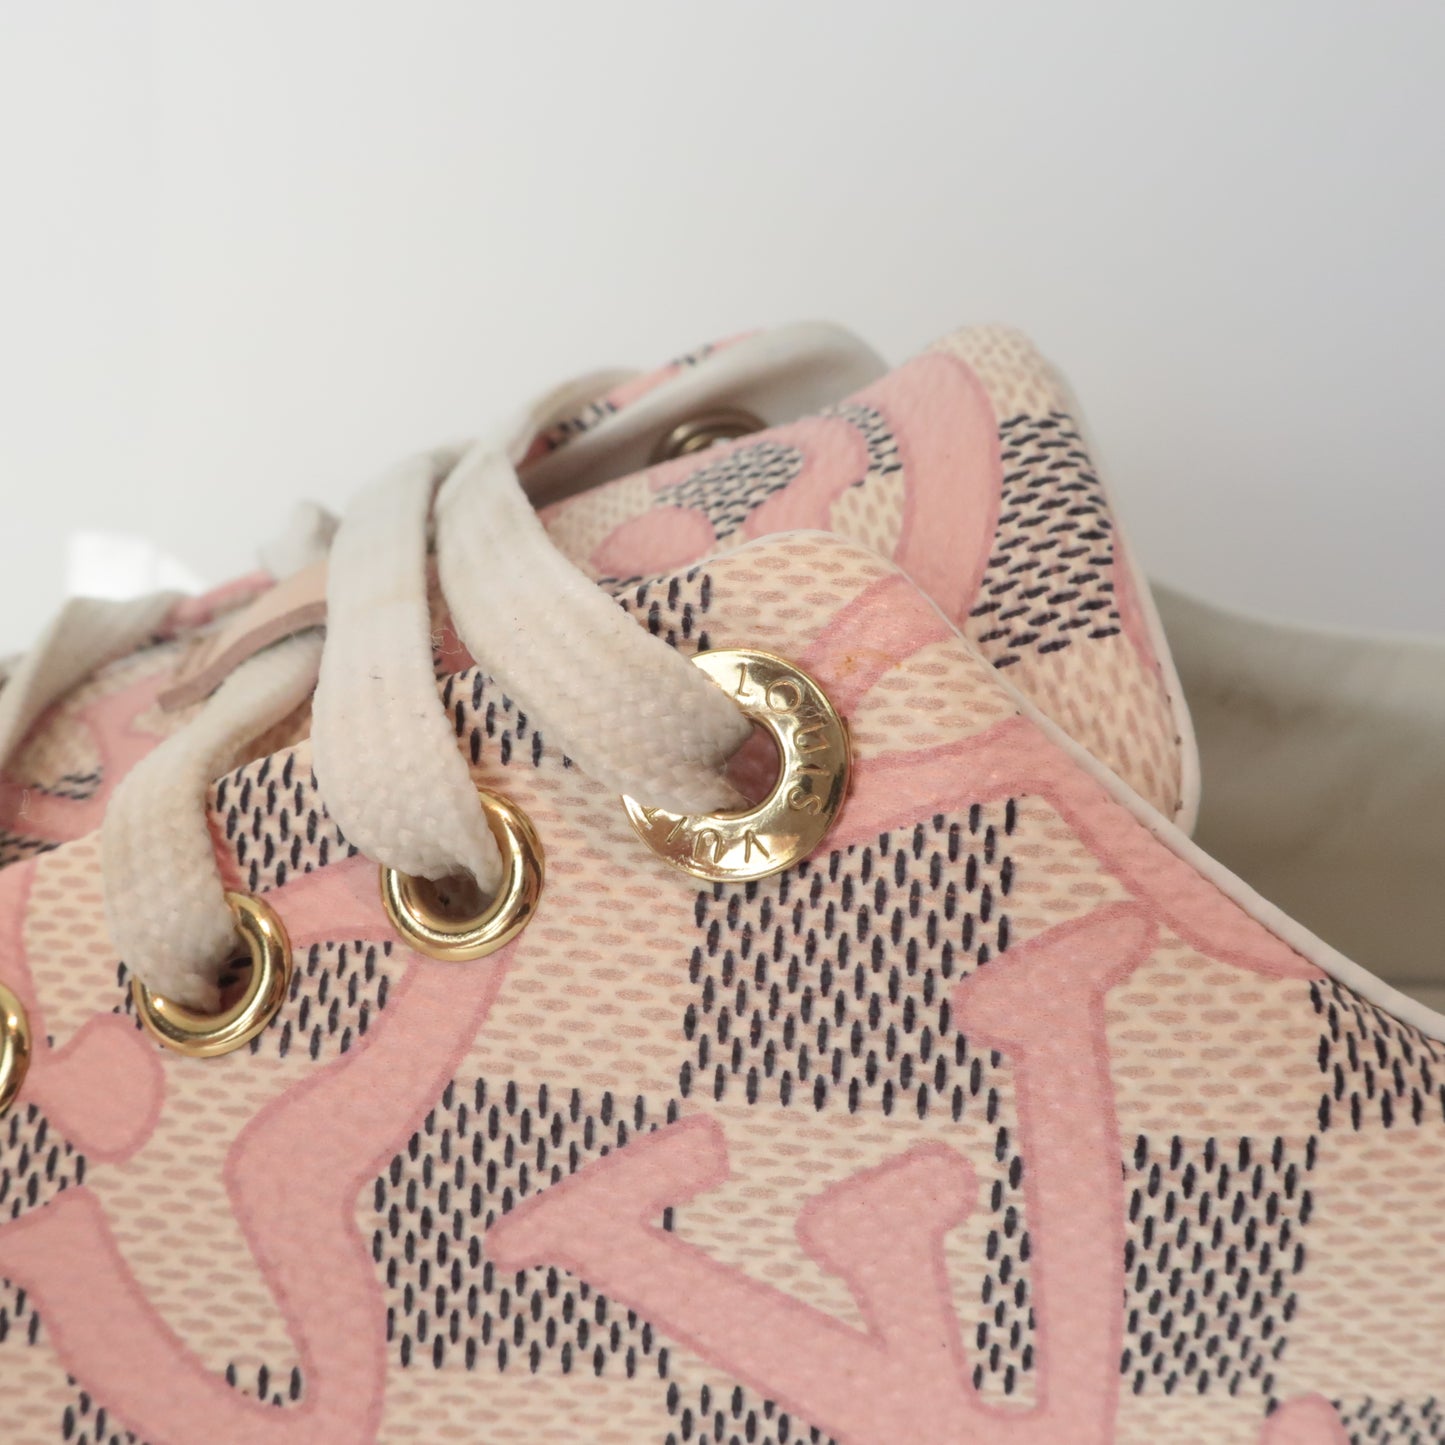 Louis Vuitton Tahitienne Pink Flower Sneakers (774)